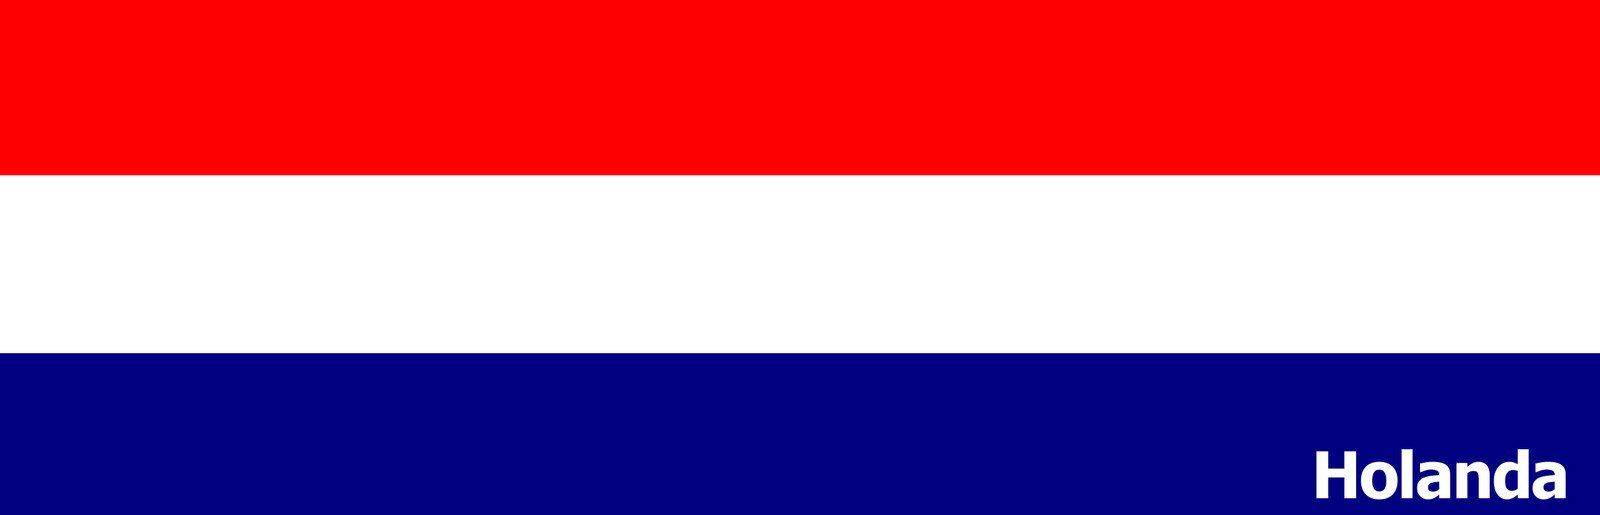 Bandera-Holanda.jpg